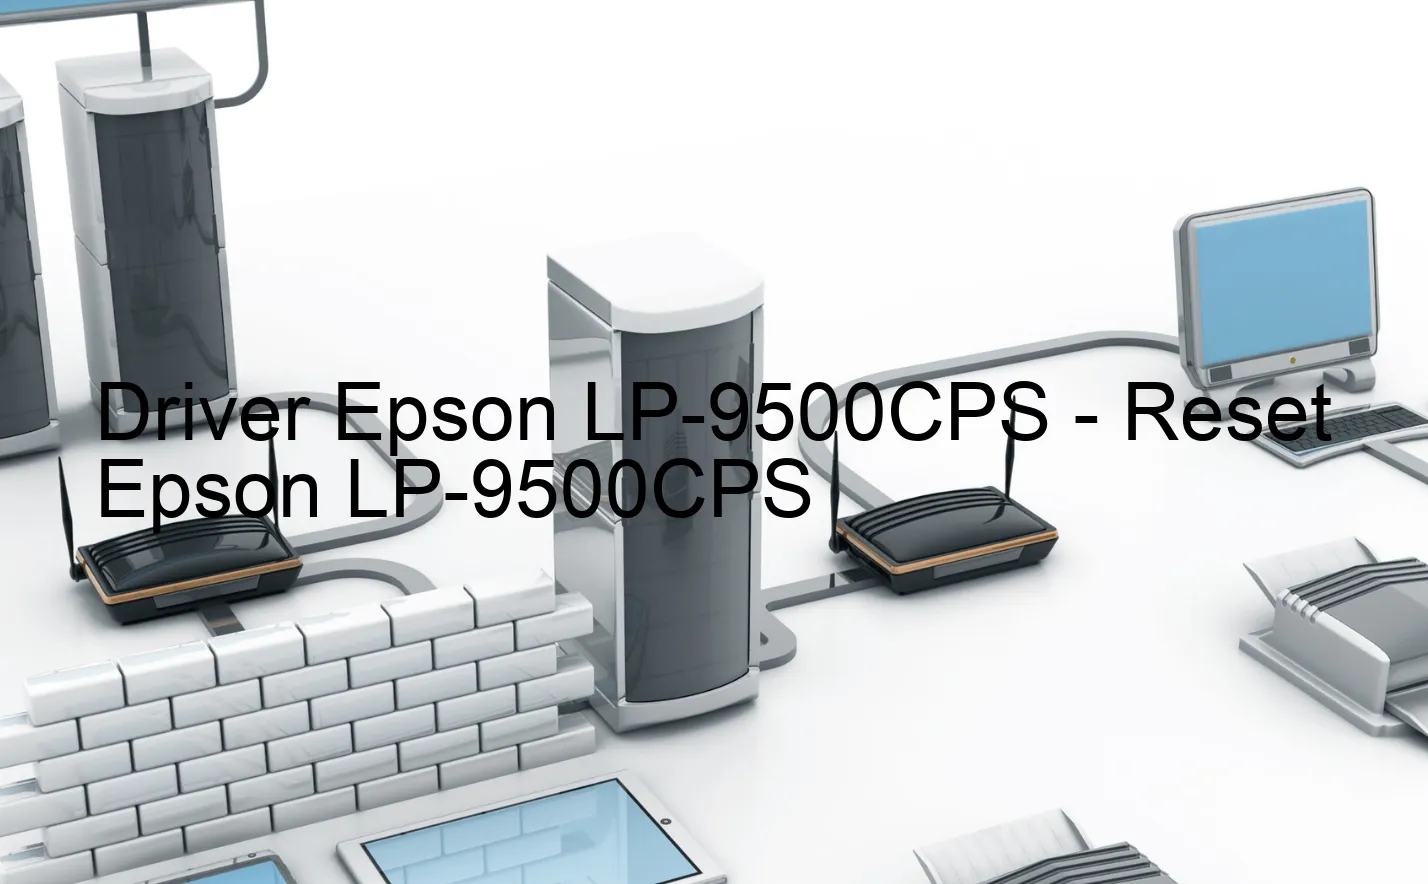 Epson LP-9500CPSのドライバー、Epson LP-9500CPSのリセットソフトウェア